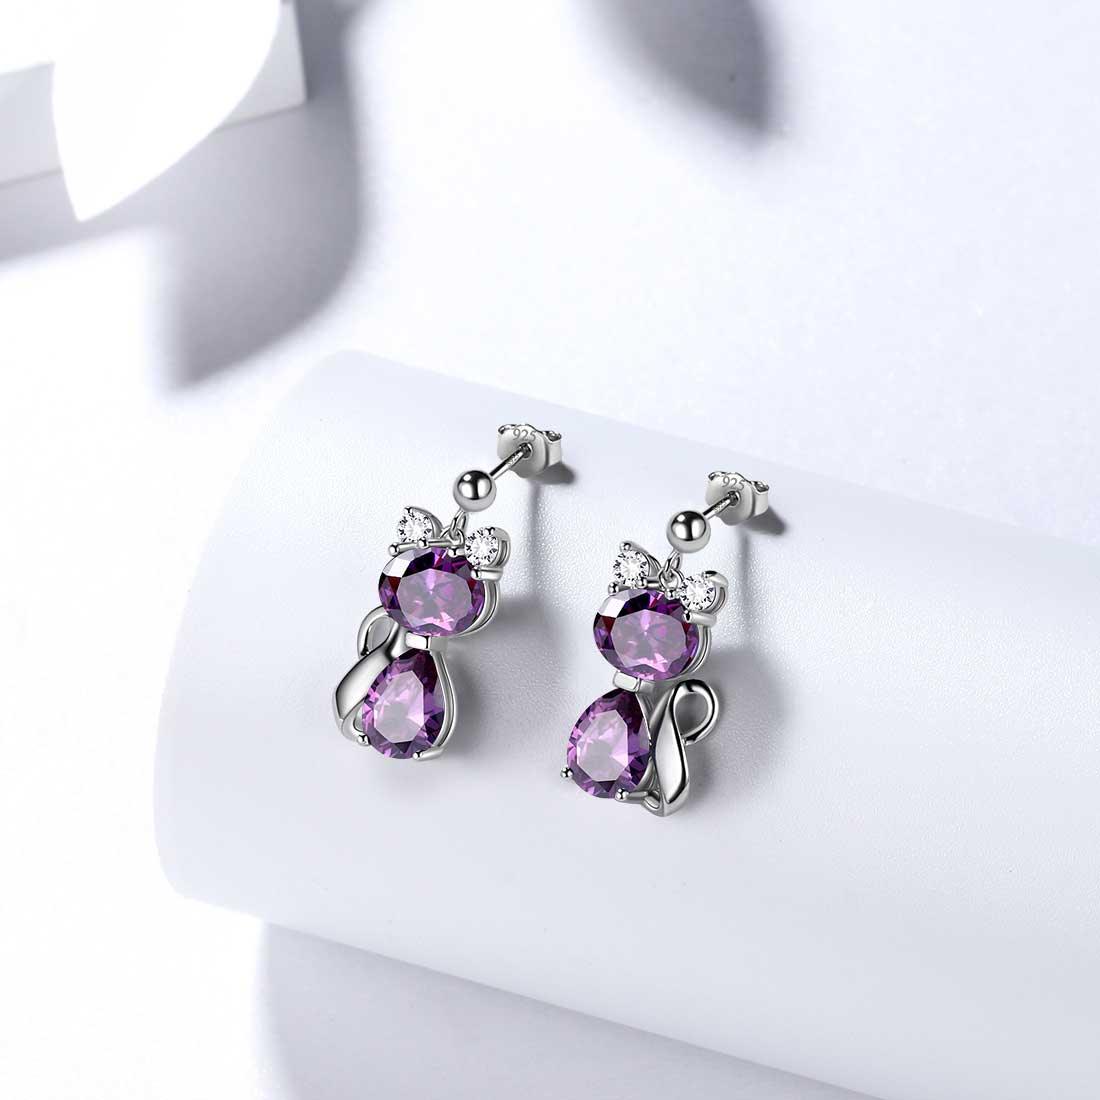 Cats Necklace Earrings Jewelry Purple February Birthstone - Jewelry Set - Aurora Tears Jewelry